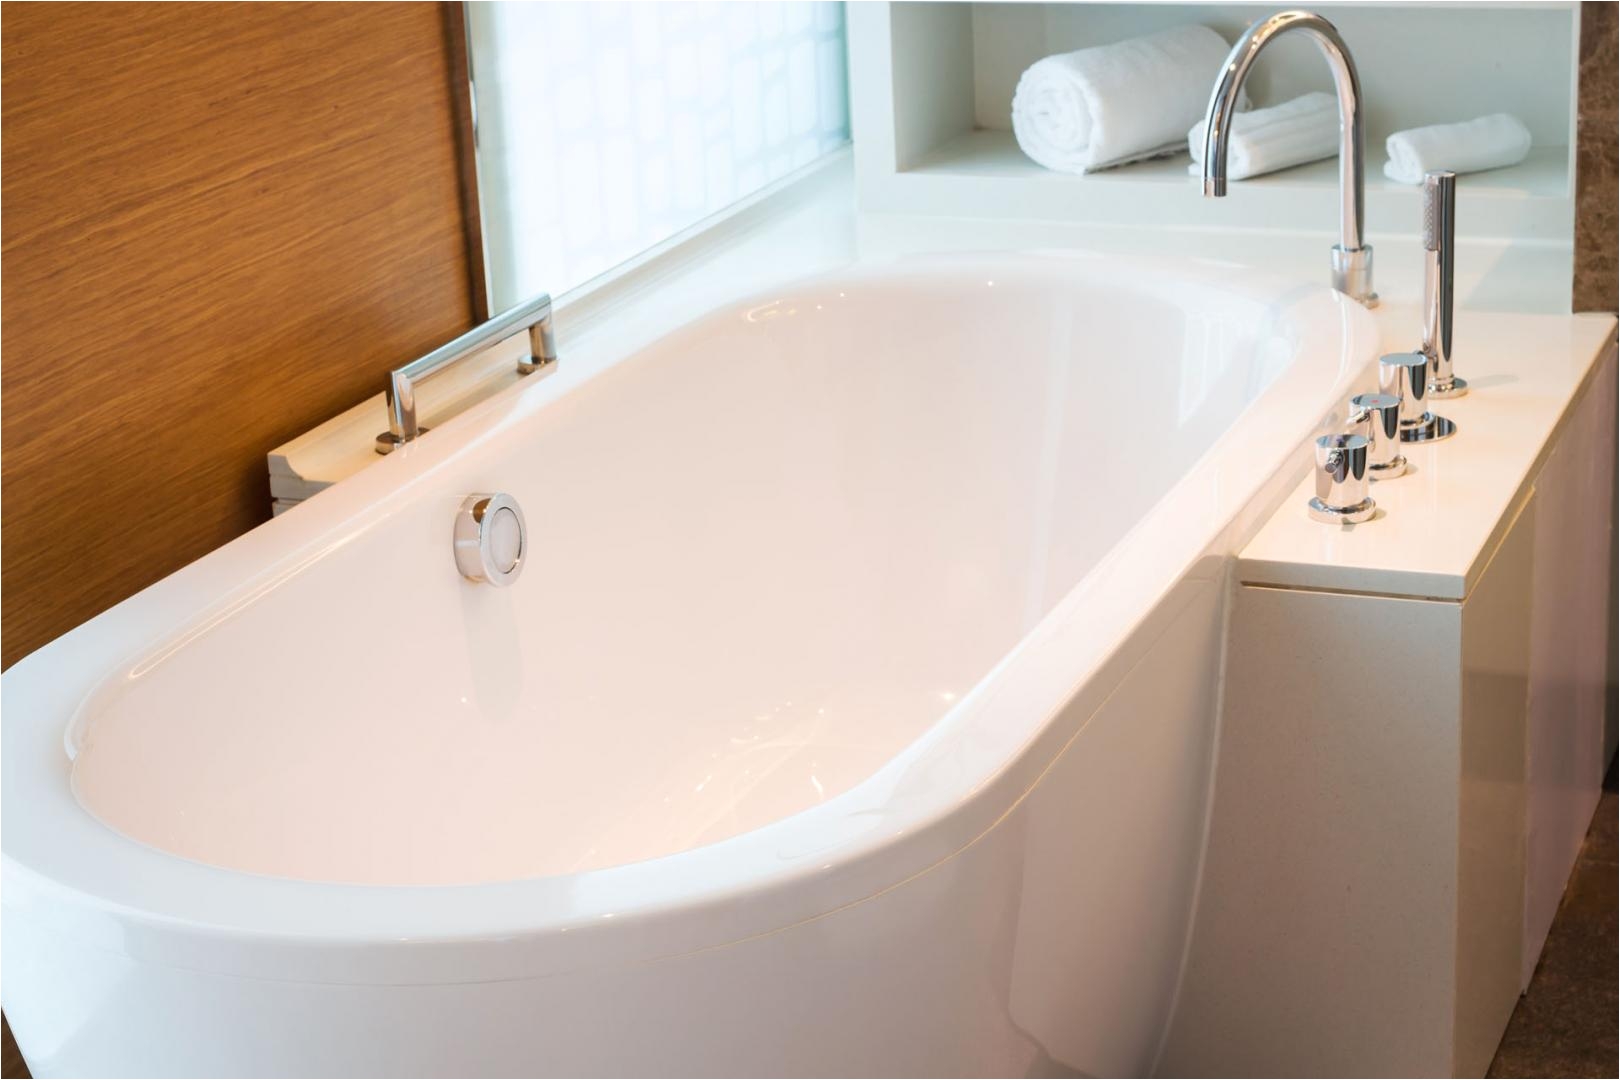 sacramento bathtub reglazing tub resurfacing contractors bathroom bathtub reglazing tile resurfacing porcelain tub reglazing clawfoot bathtub reglazing 1